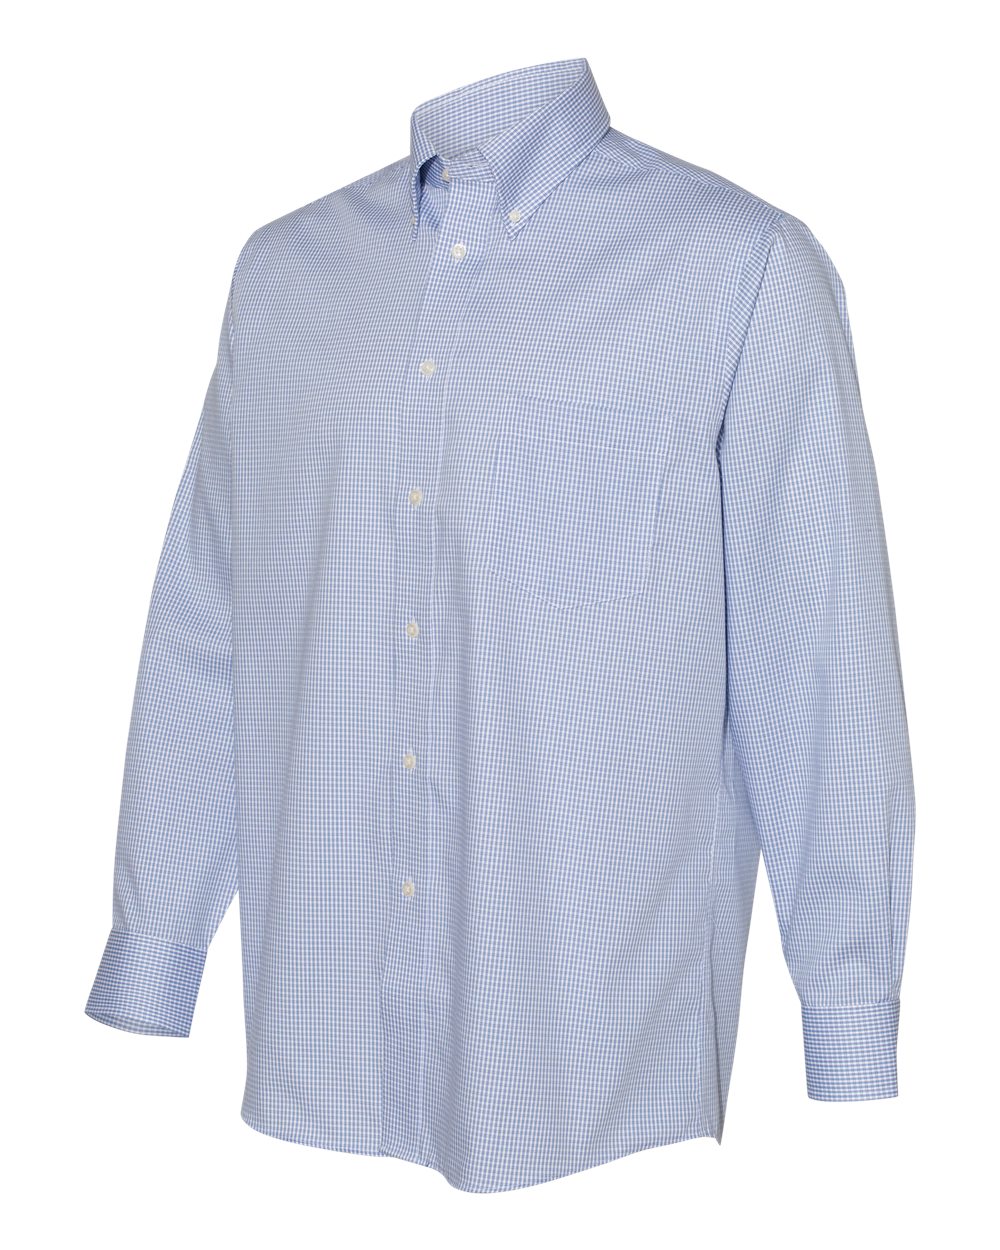 Van Heusen - Blue Suitings Non-Iron Patterned Shirt - 13V0467